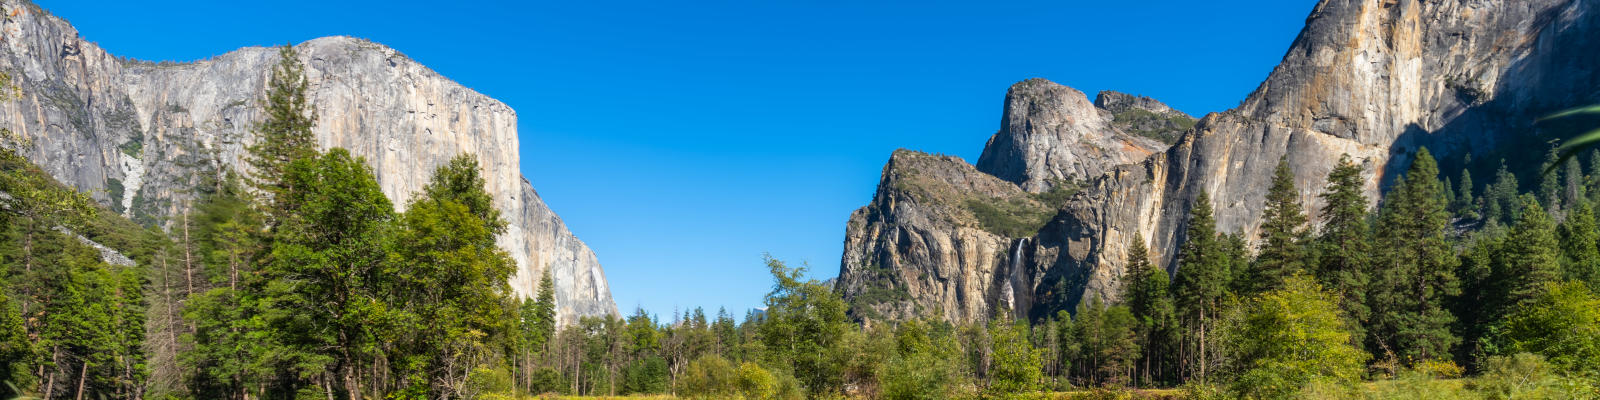 mountains at Yosemite national park